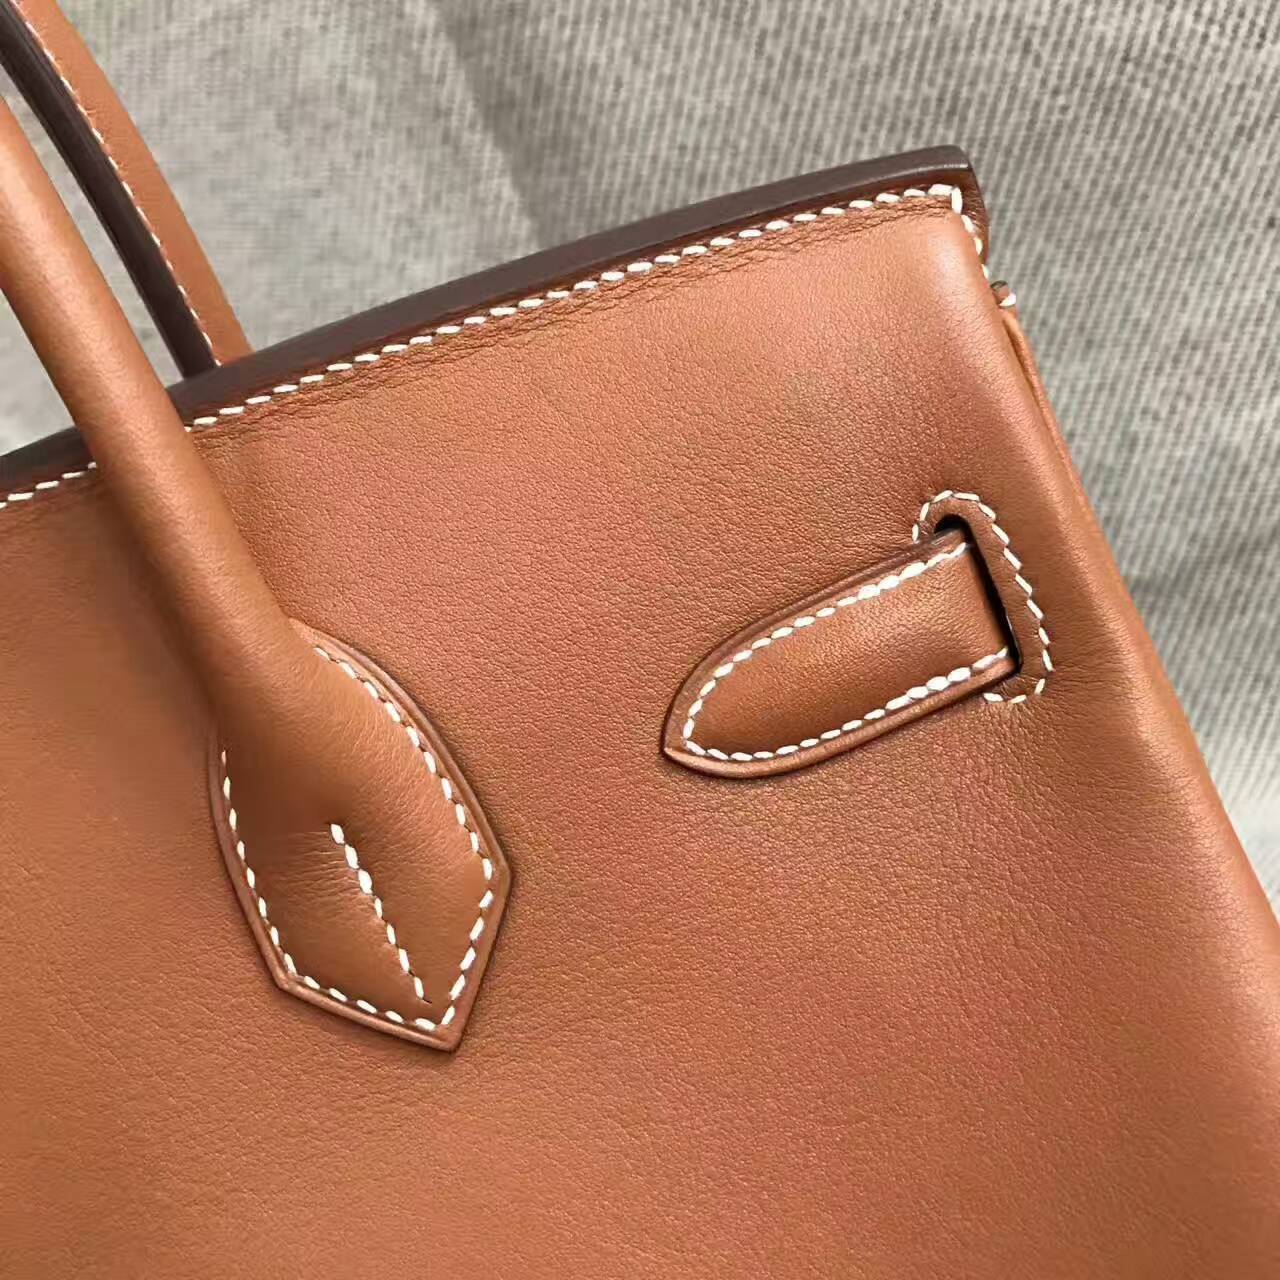 High Quality Hermes Birkin Handbag in  CK37 Gold Swift Leather